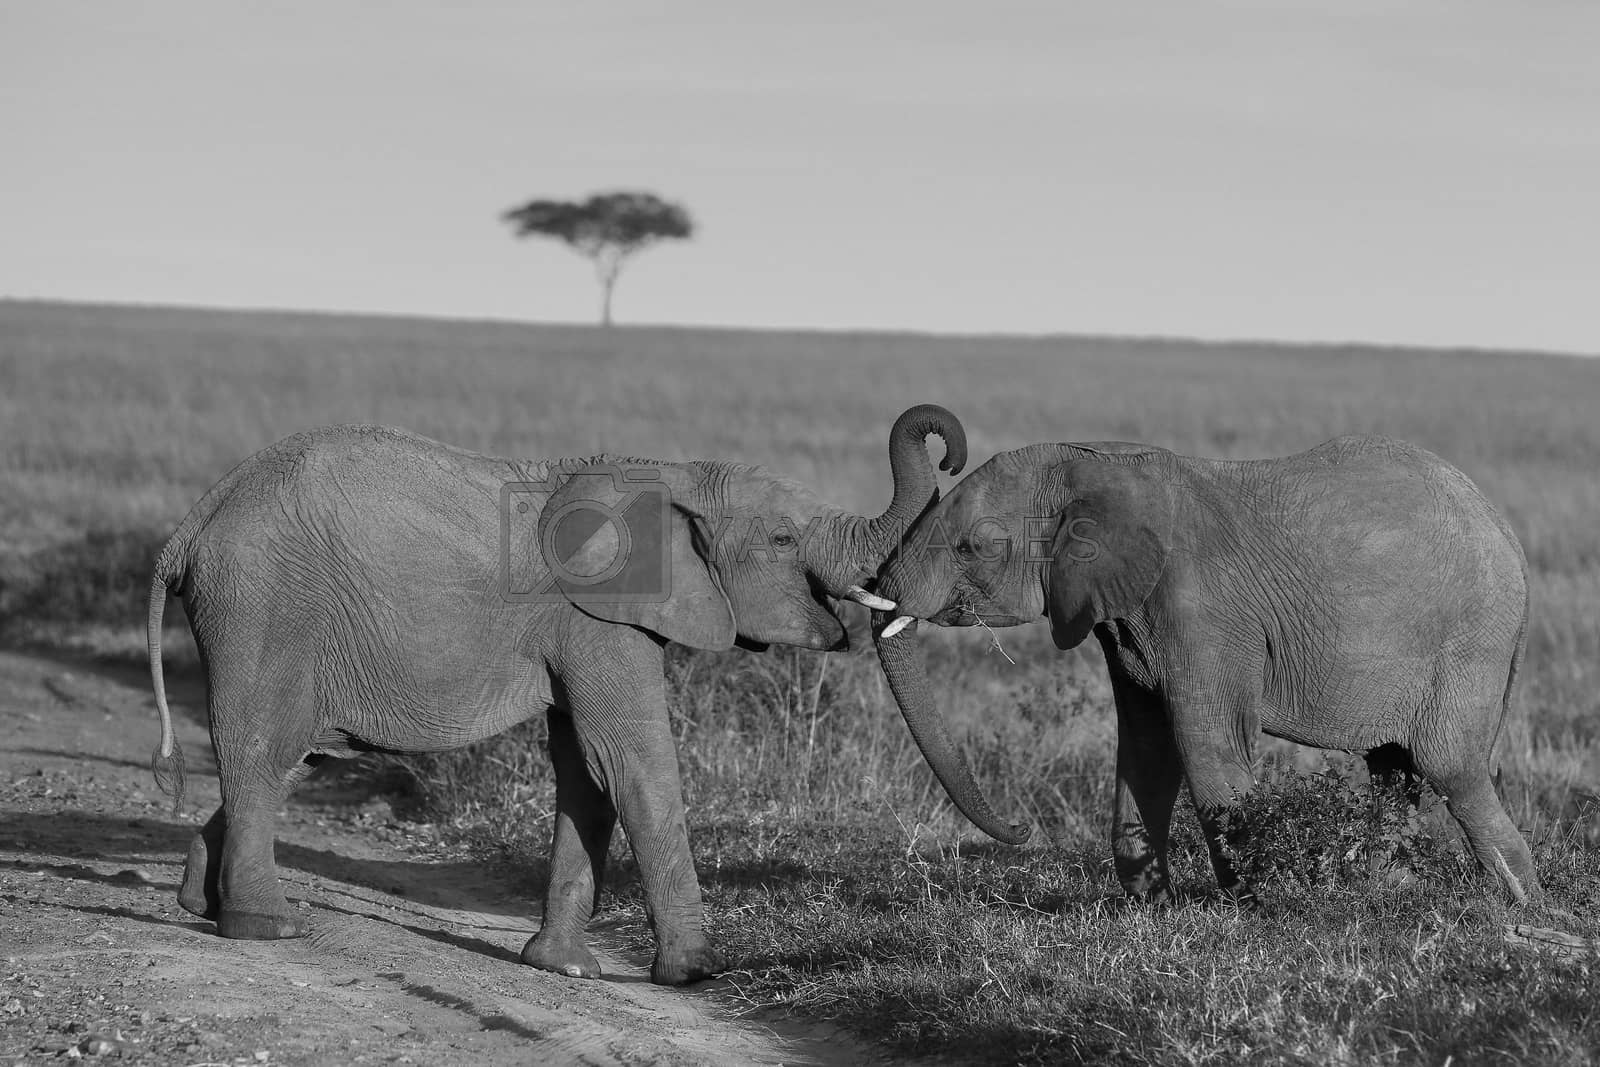 Royalty free image of Elephant in the wilderness by ozkanzozmen